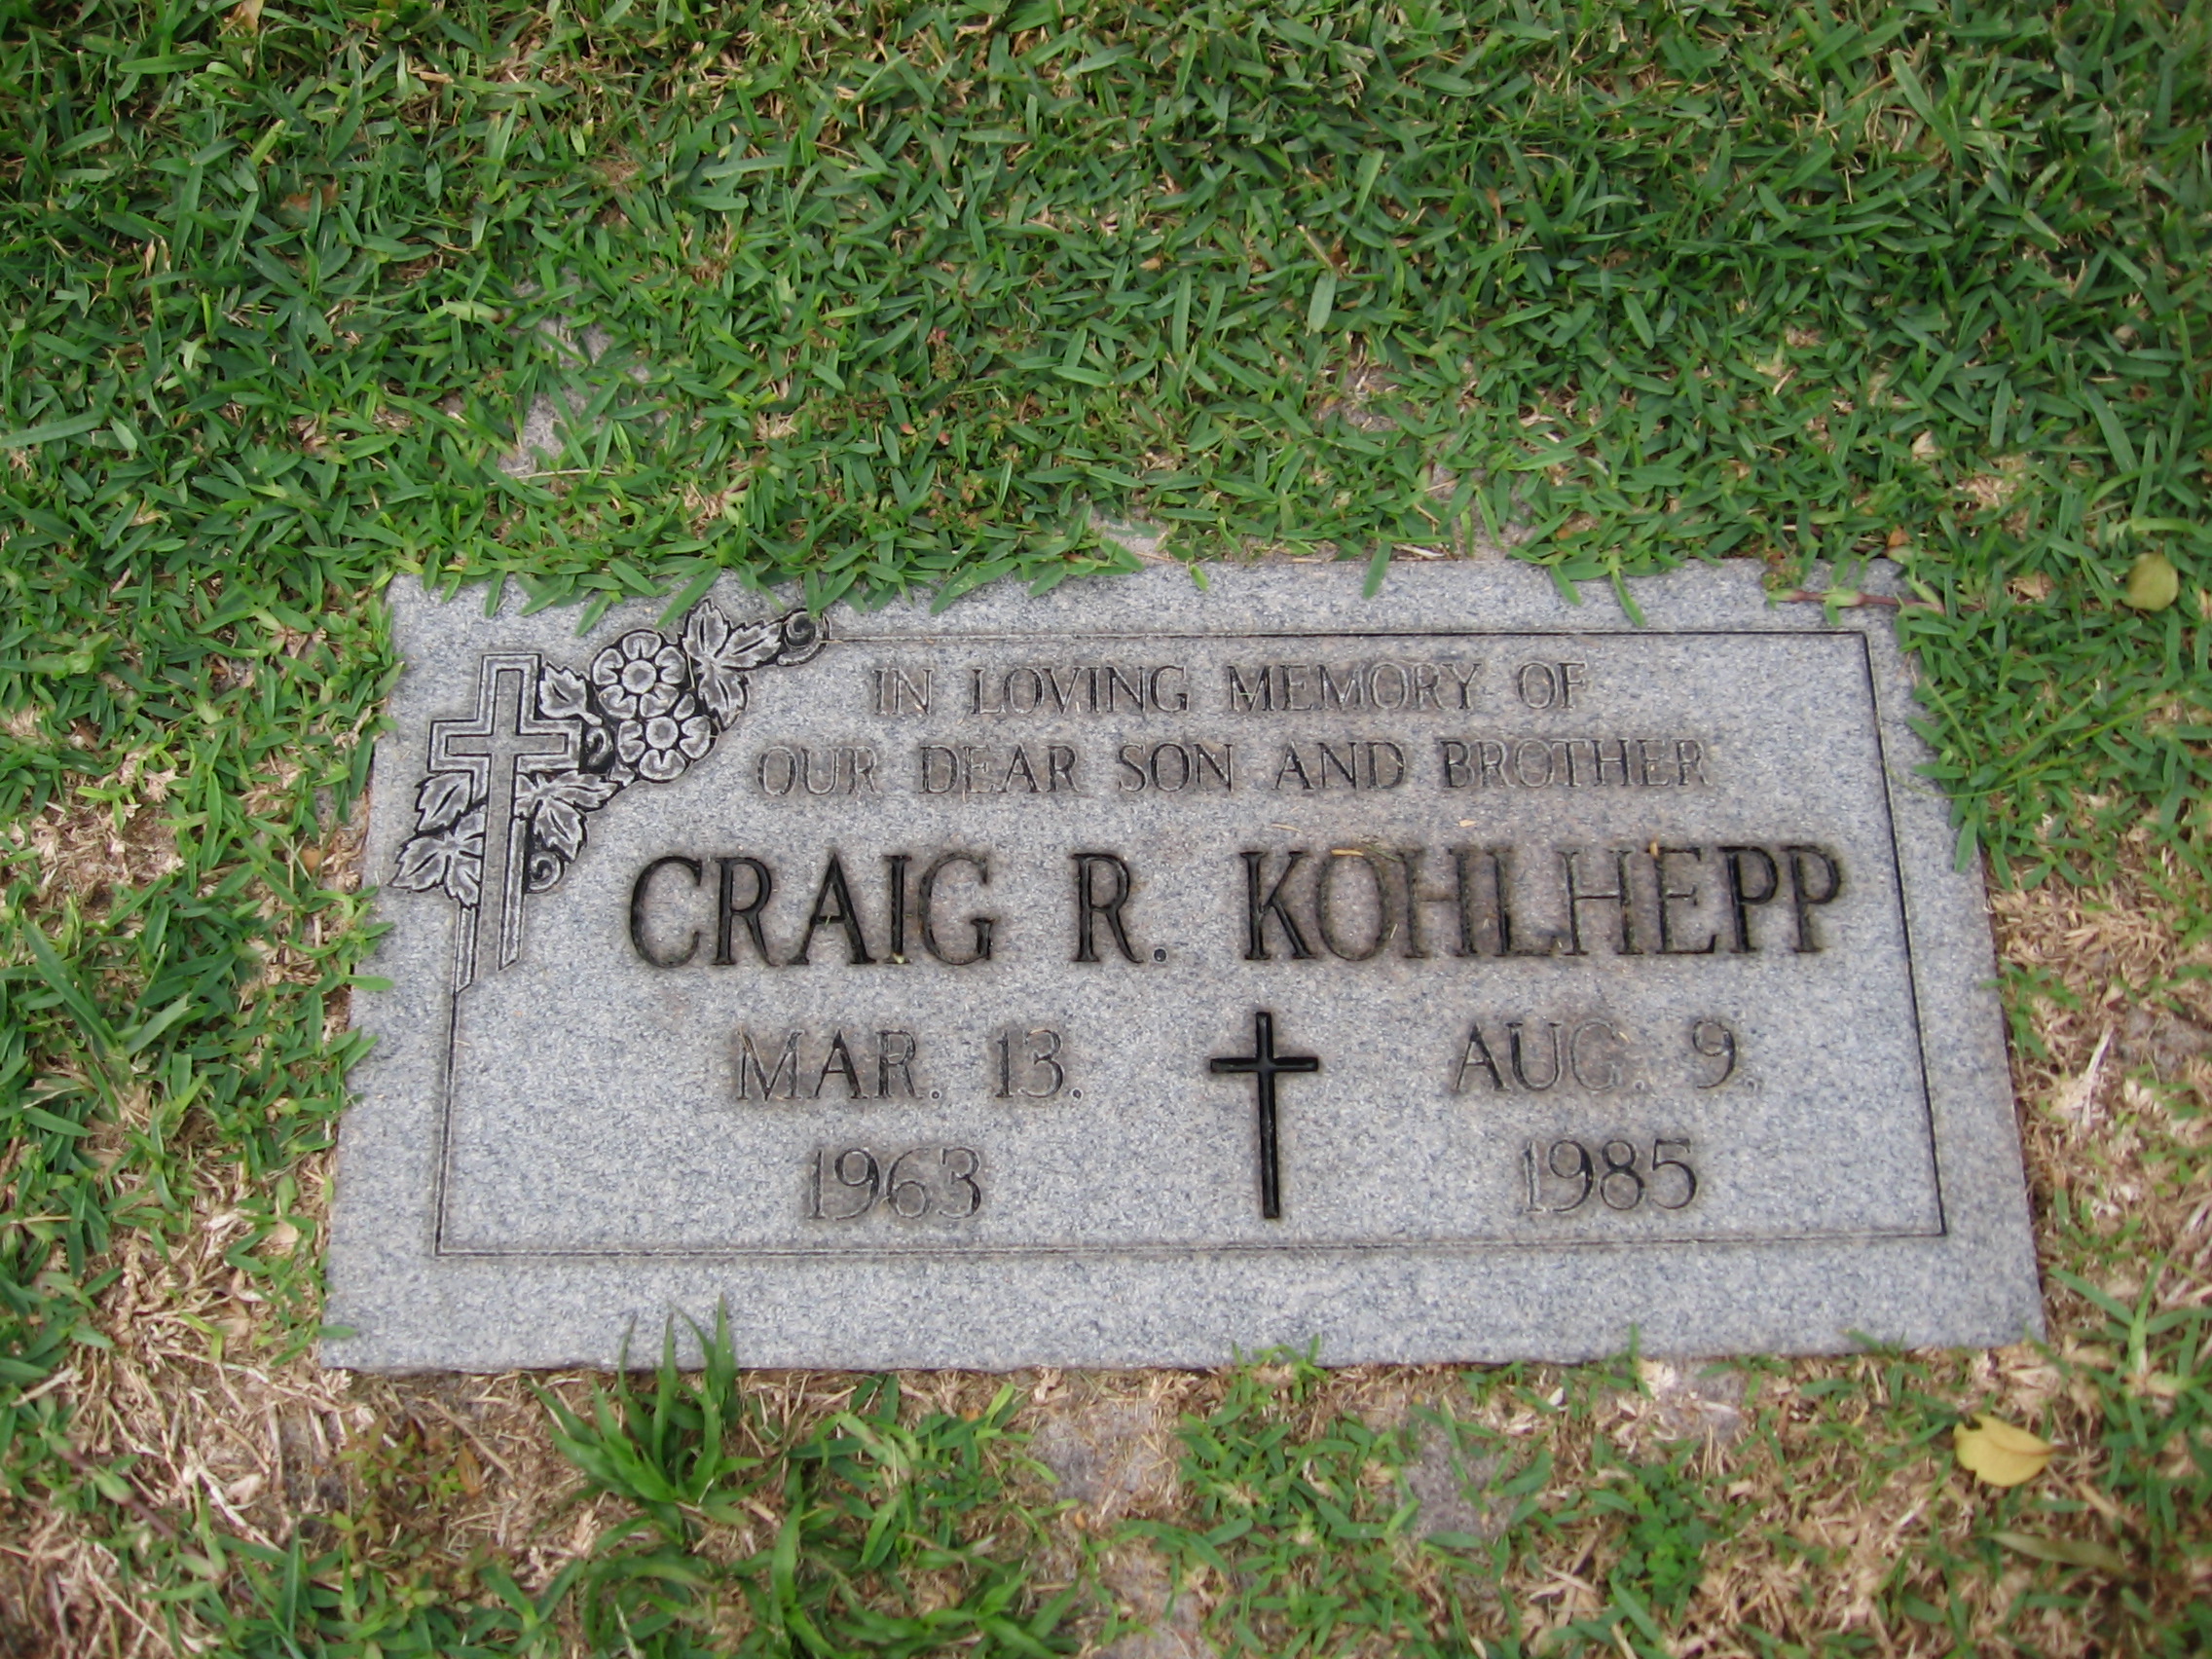 Craig R Kohlhepp